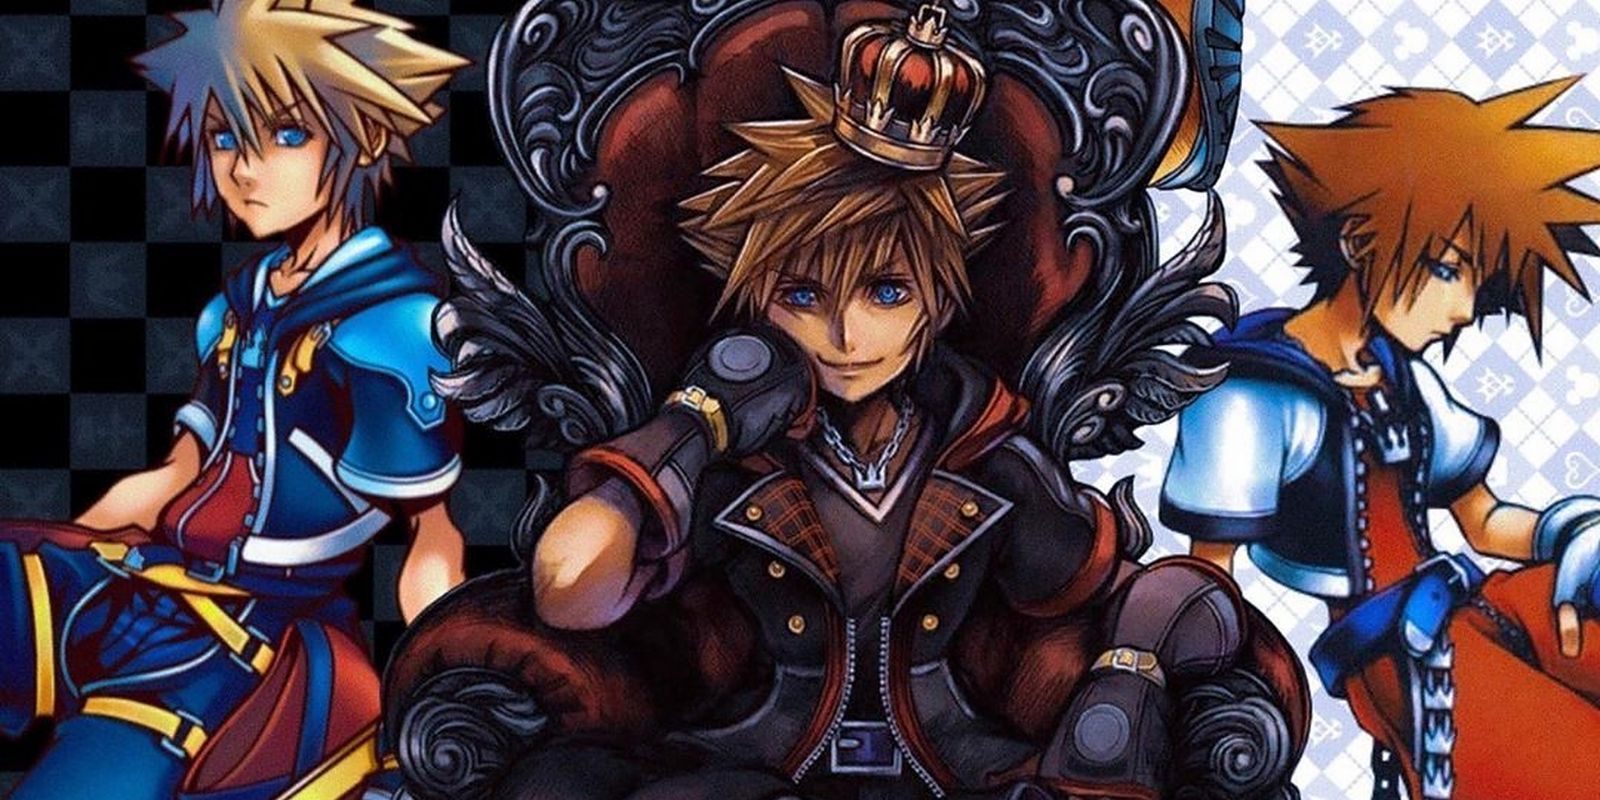 Kingdom Hearts: Why Sora’s Weapon Is A Keyblade